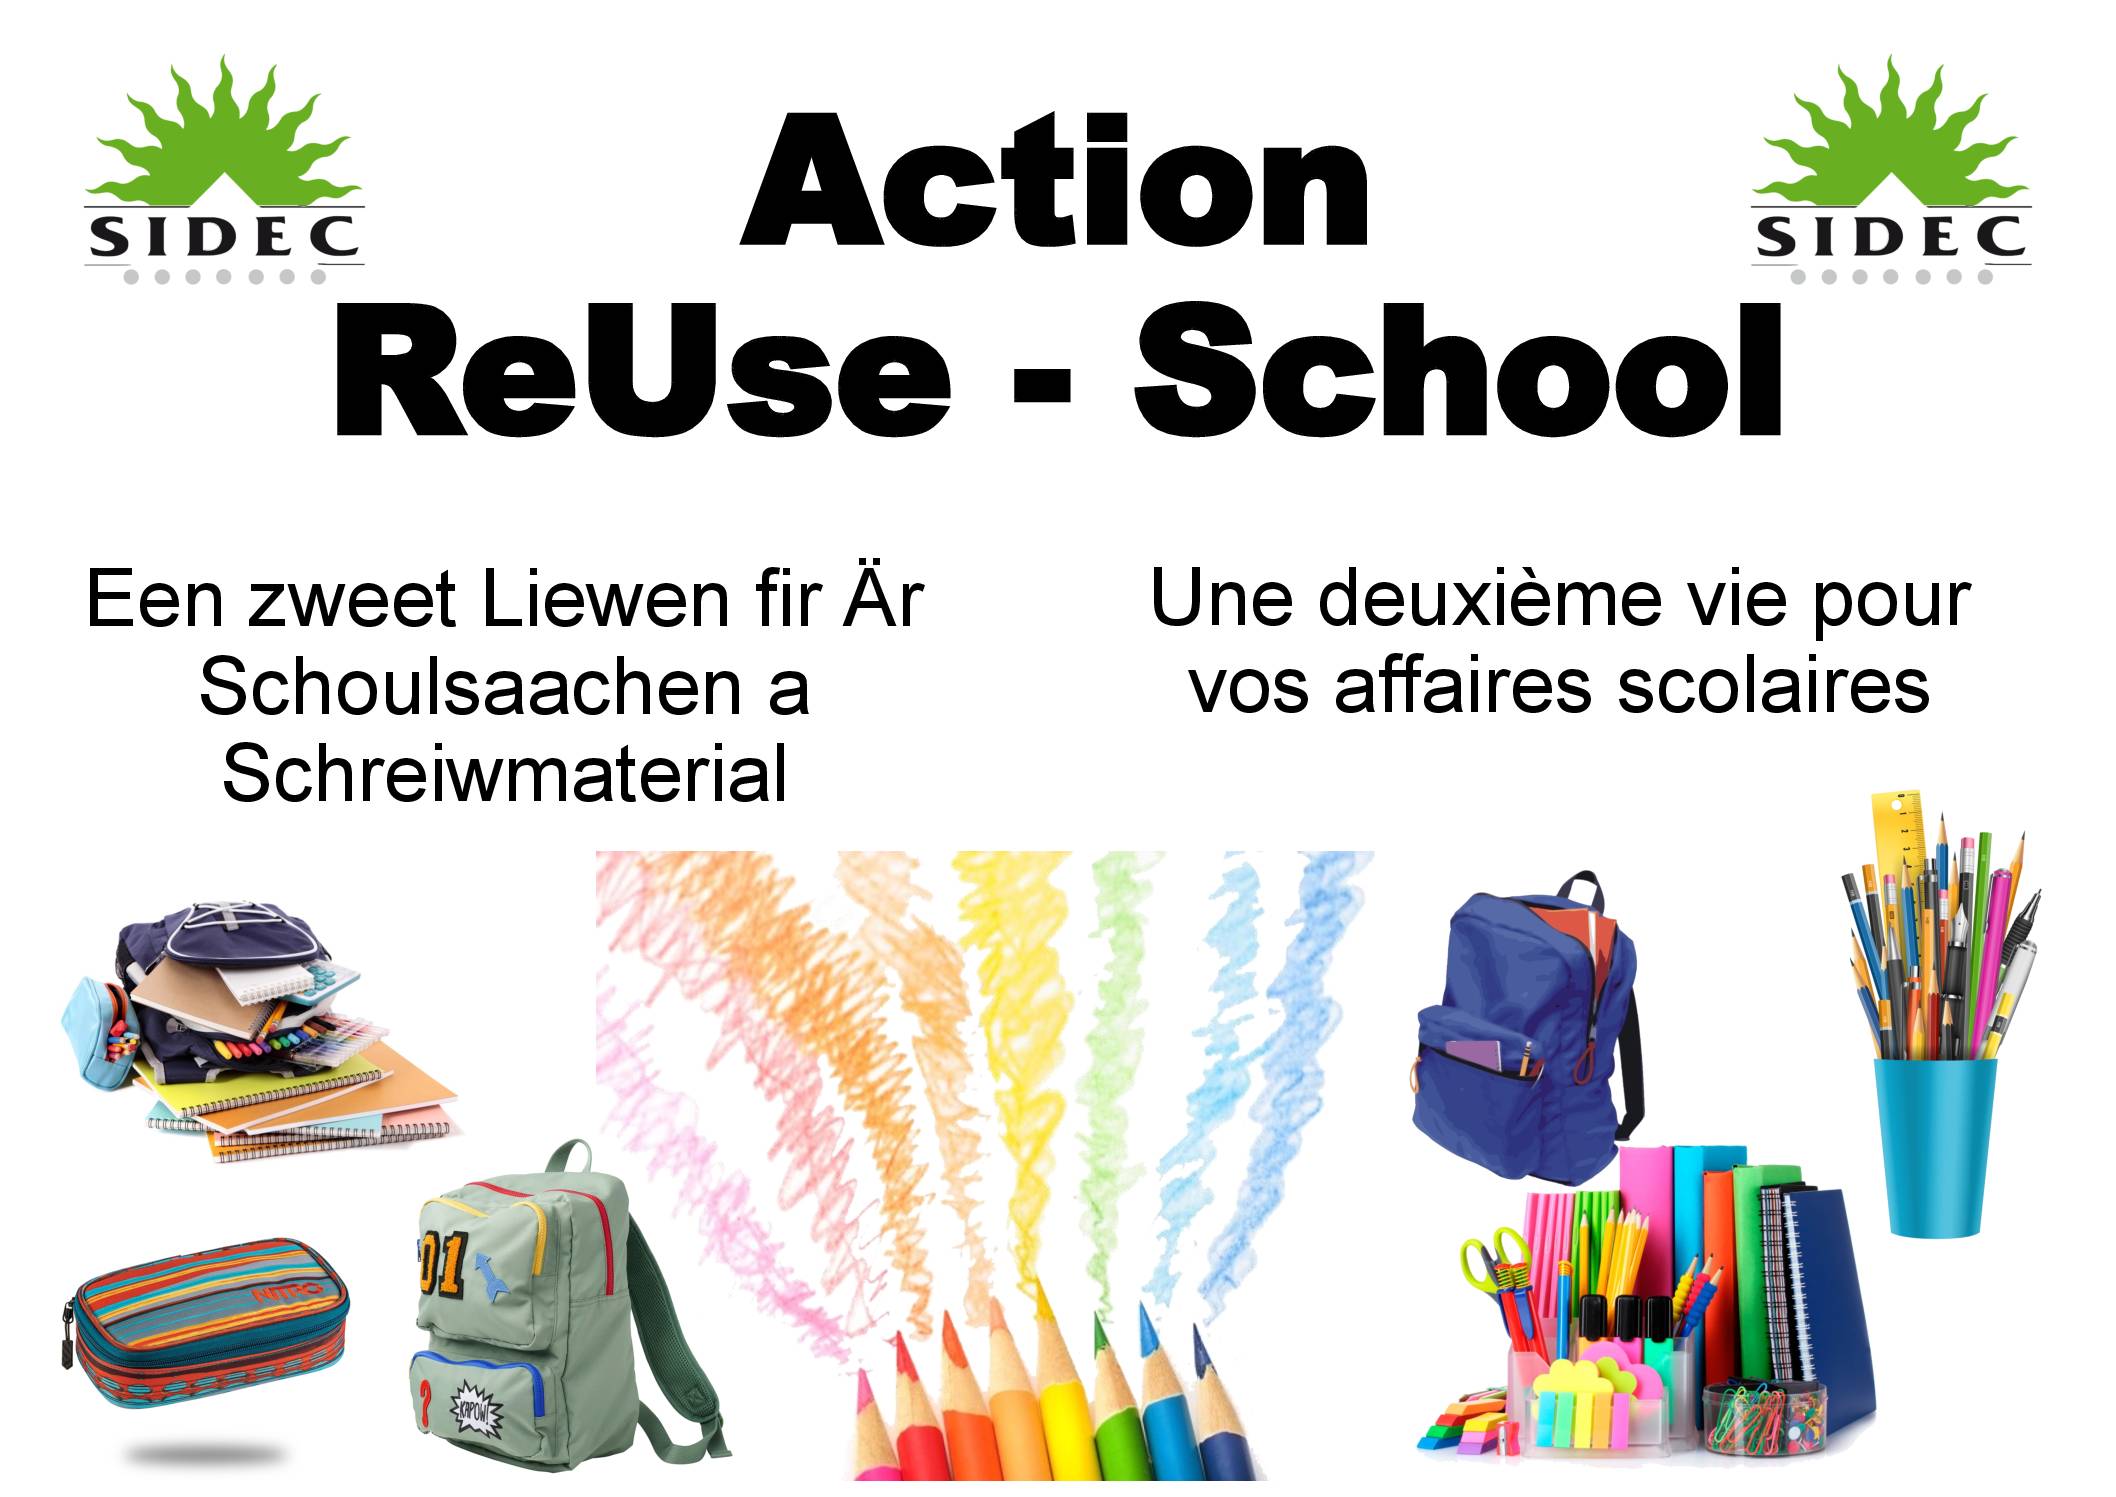 SIDEC - Action ReUse-school